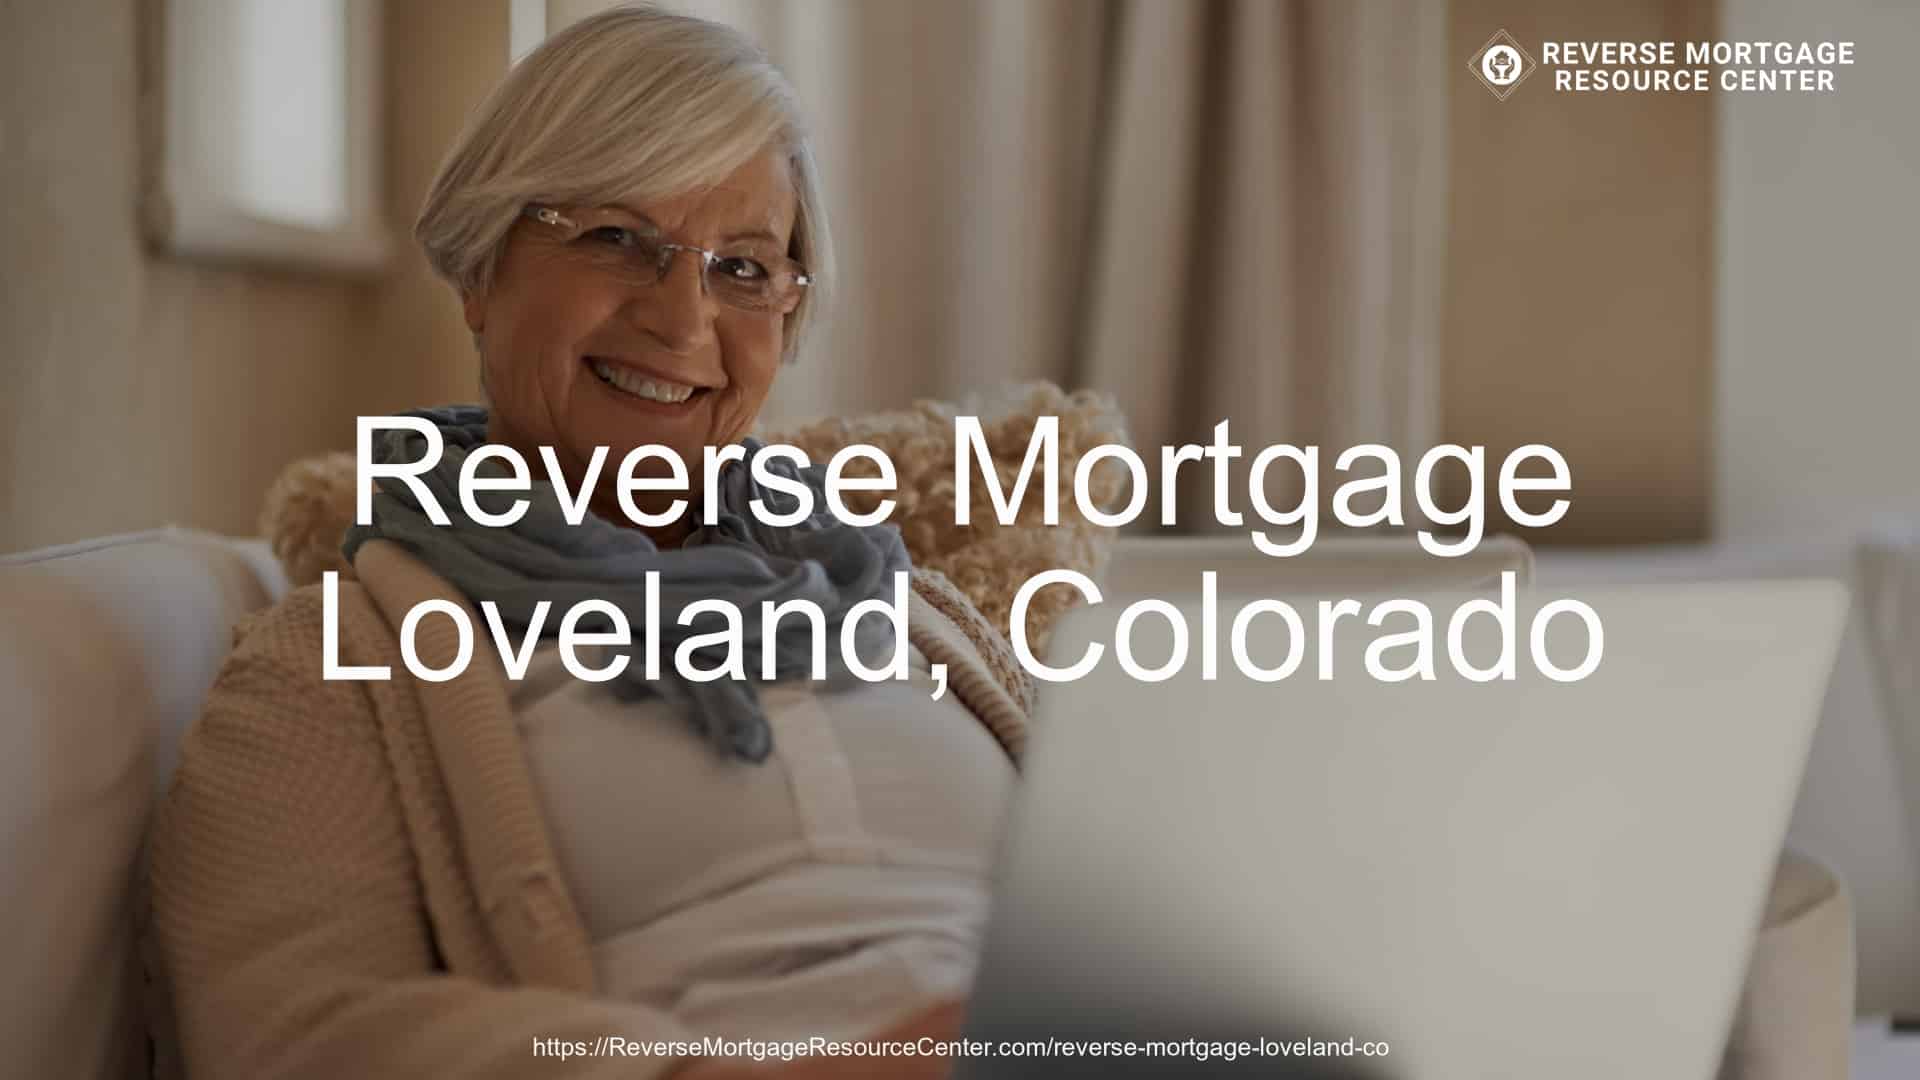 Reverse Mortgage Loans in Loveland Colorado